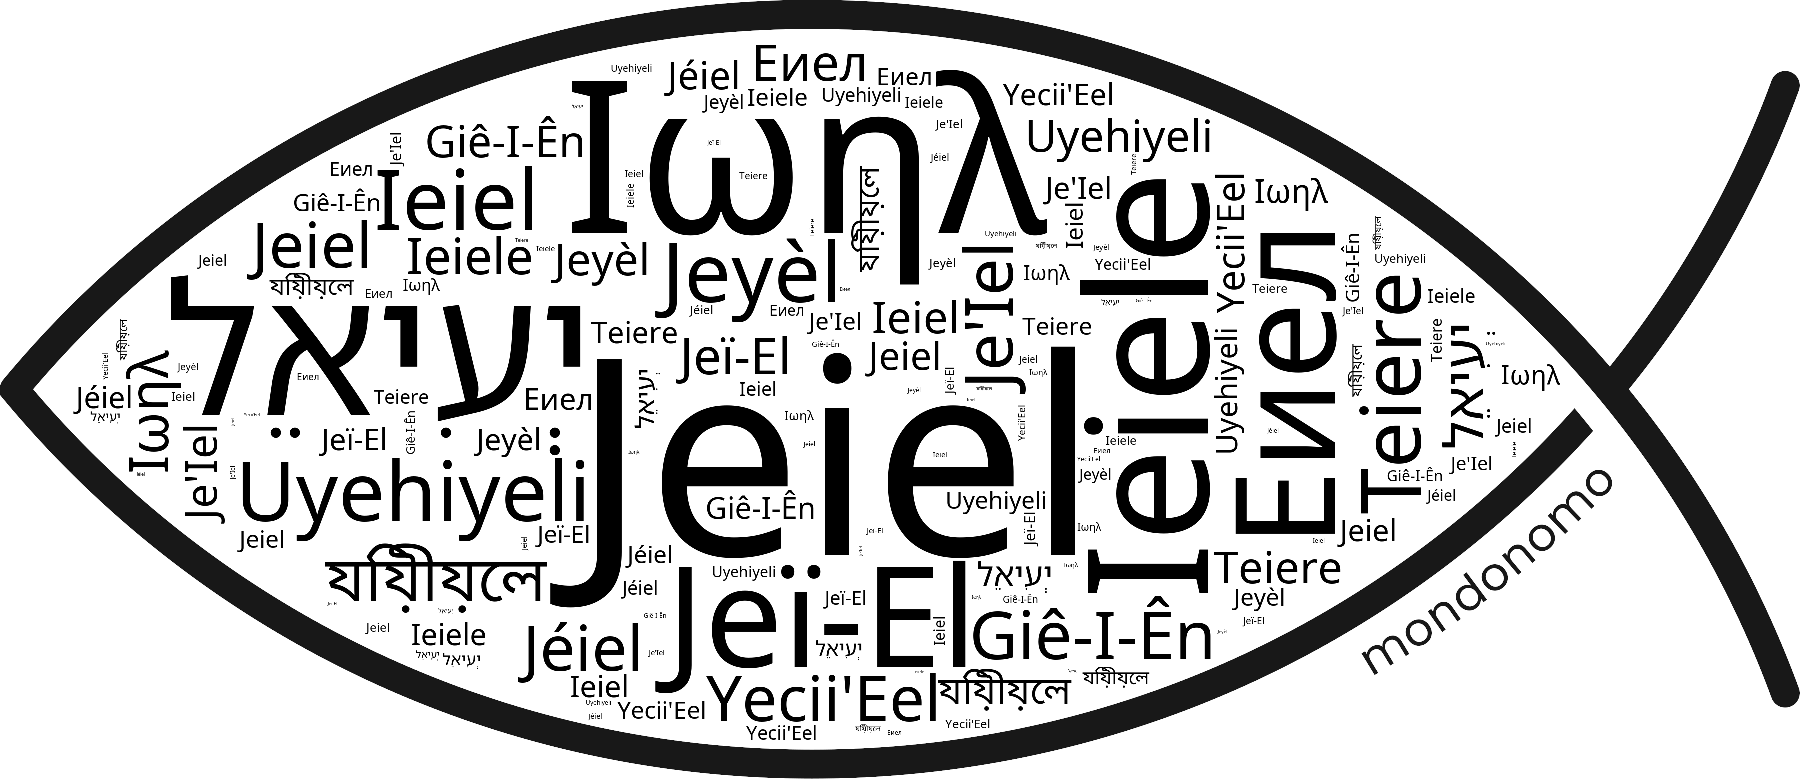 Name Jeiel in the world's Bibles